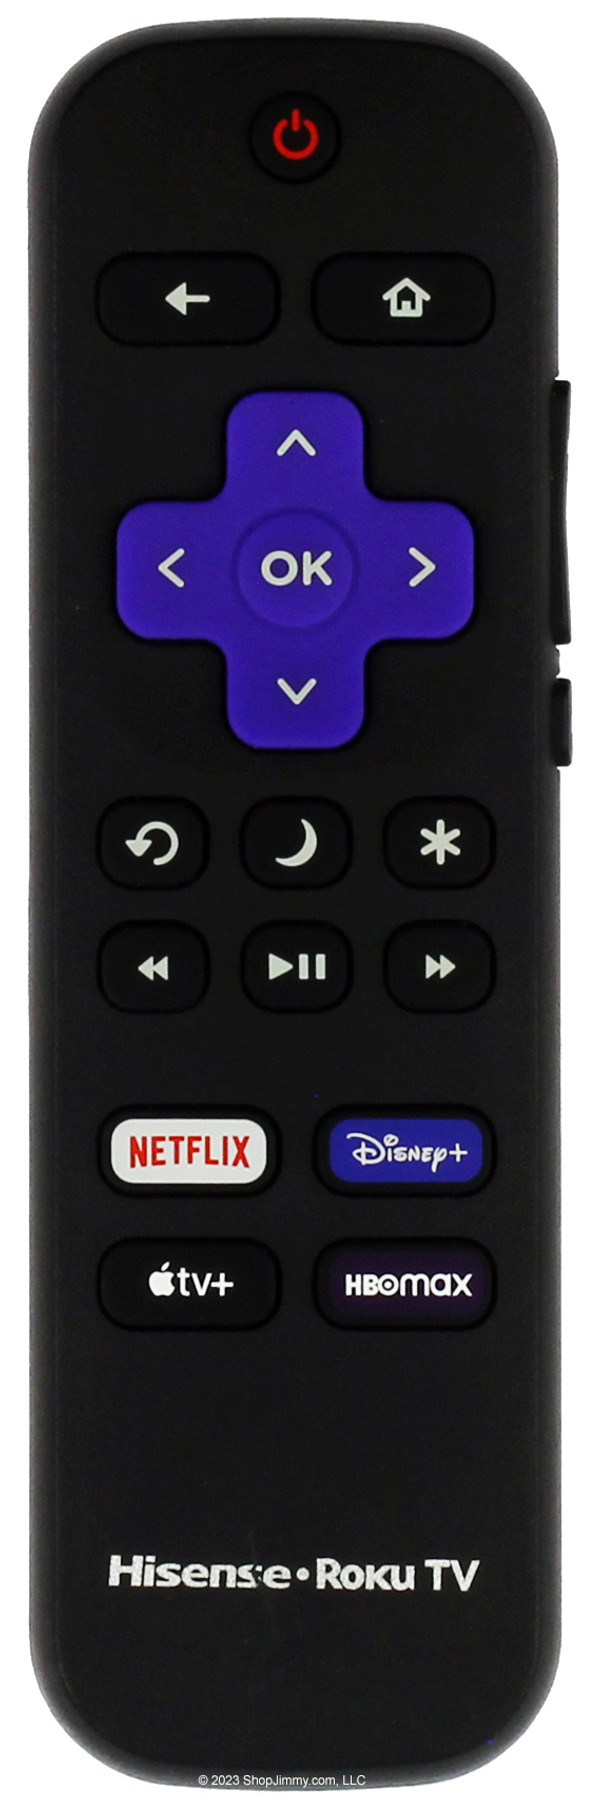 Hisense 3226001217 Roku TV Remote Control Netflix Disney Apple HBOMax -- NEW